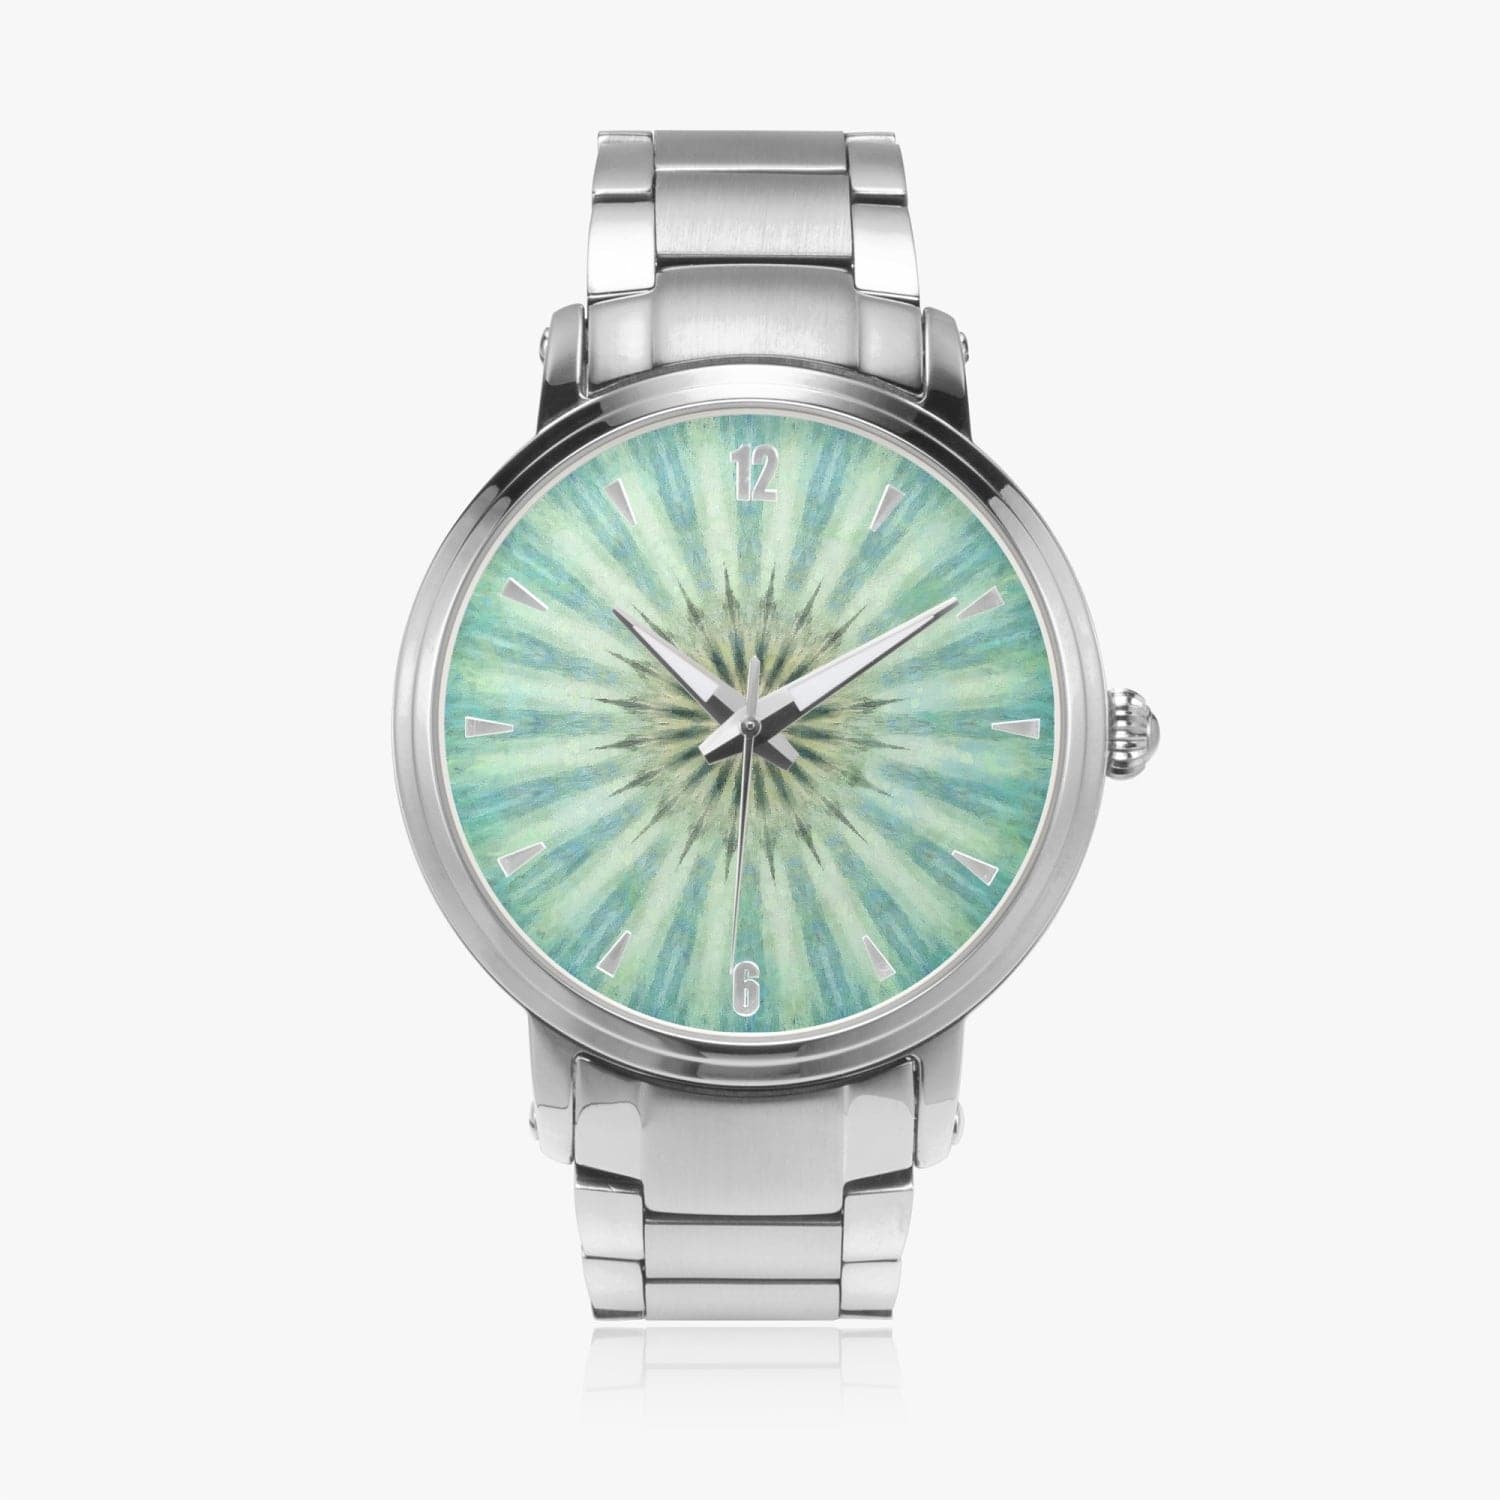 Light Green Lumen, Steel Strap Automatic Watch (With Indicators), by Sensus Studio Design